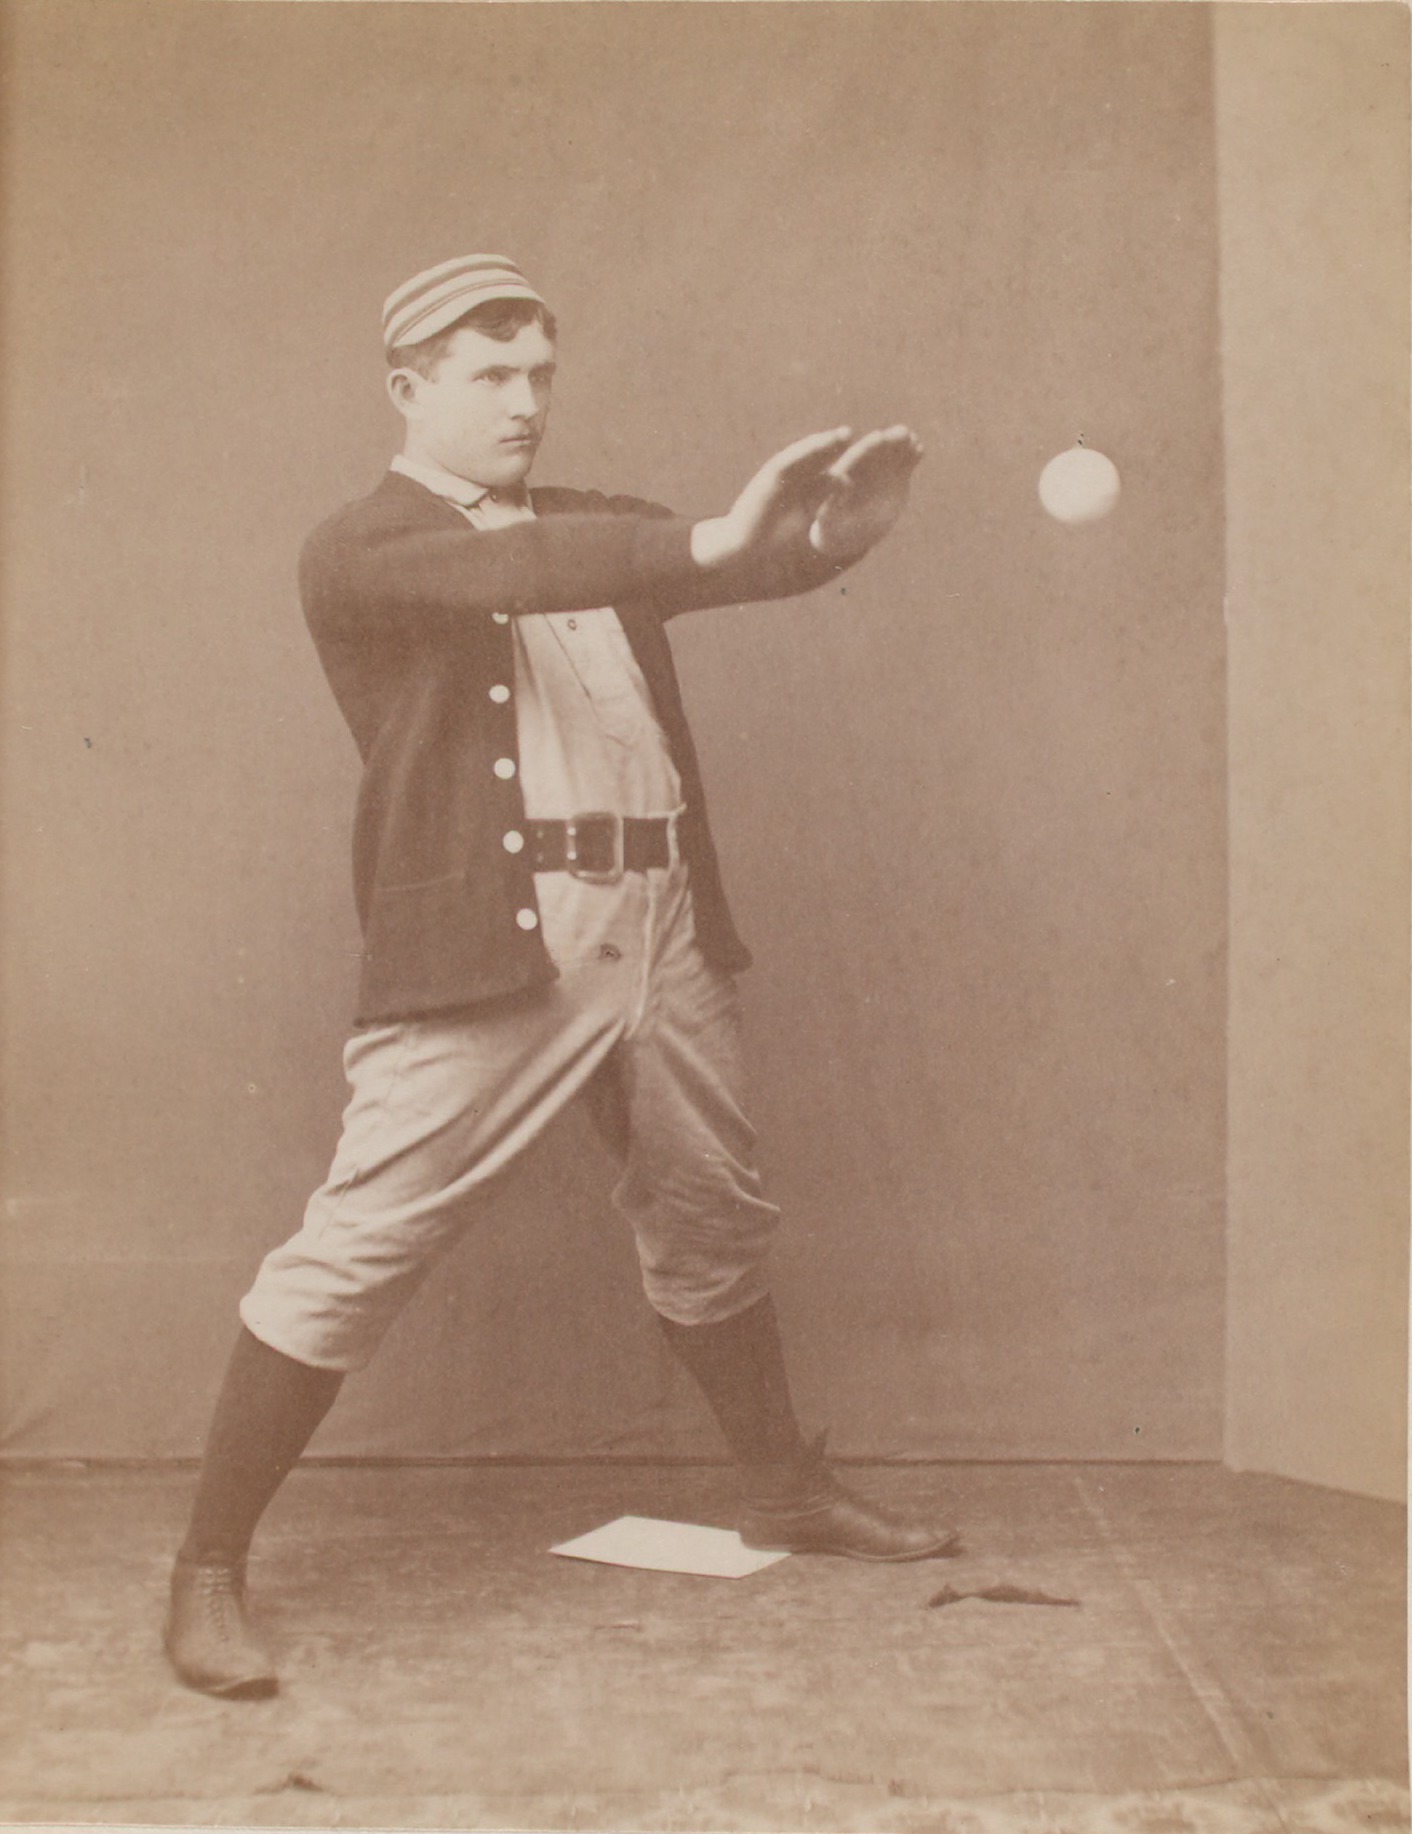 19th century baseball portraits